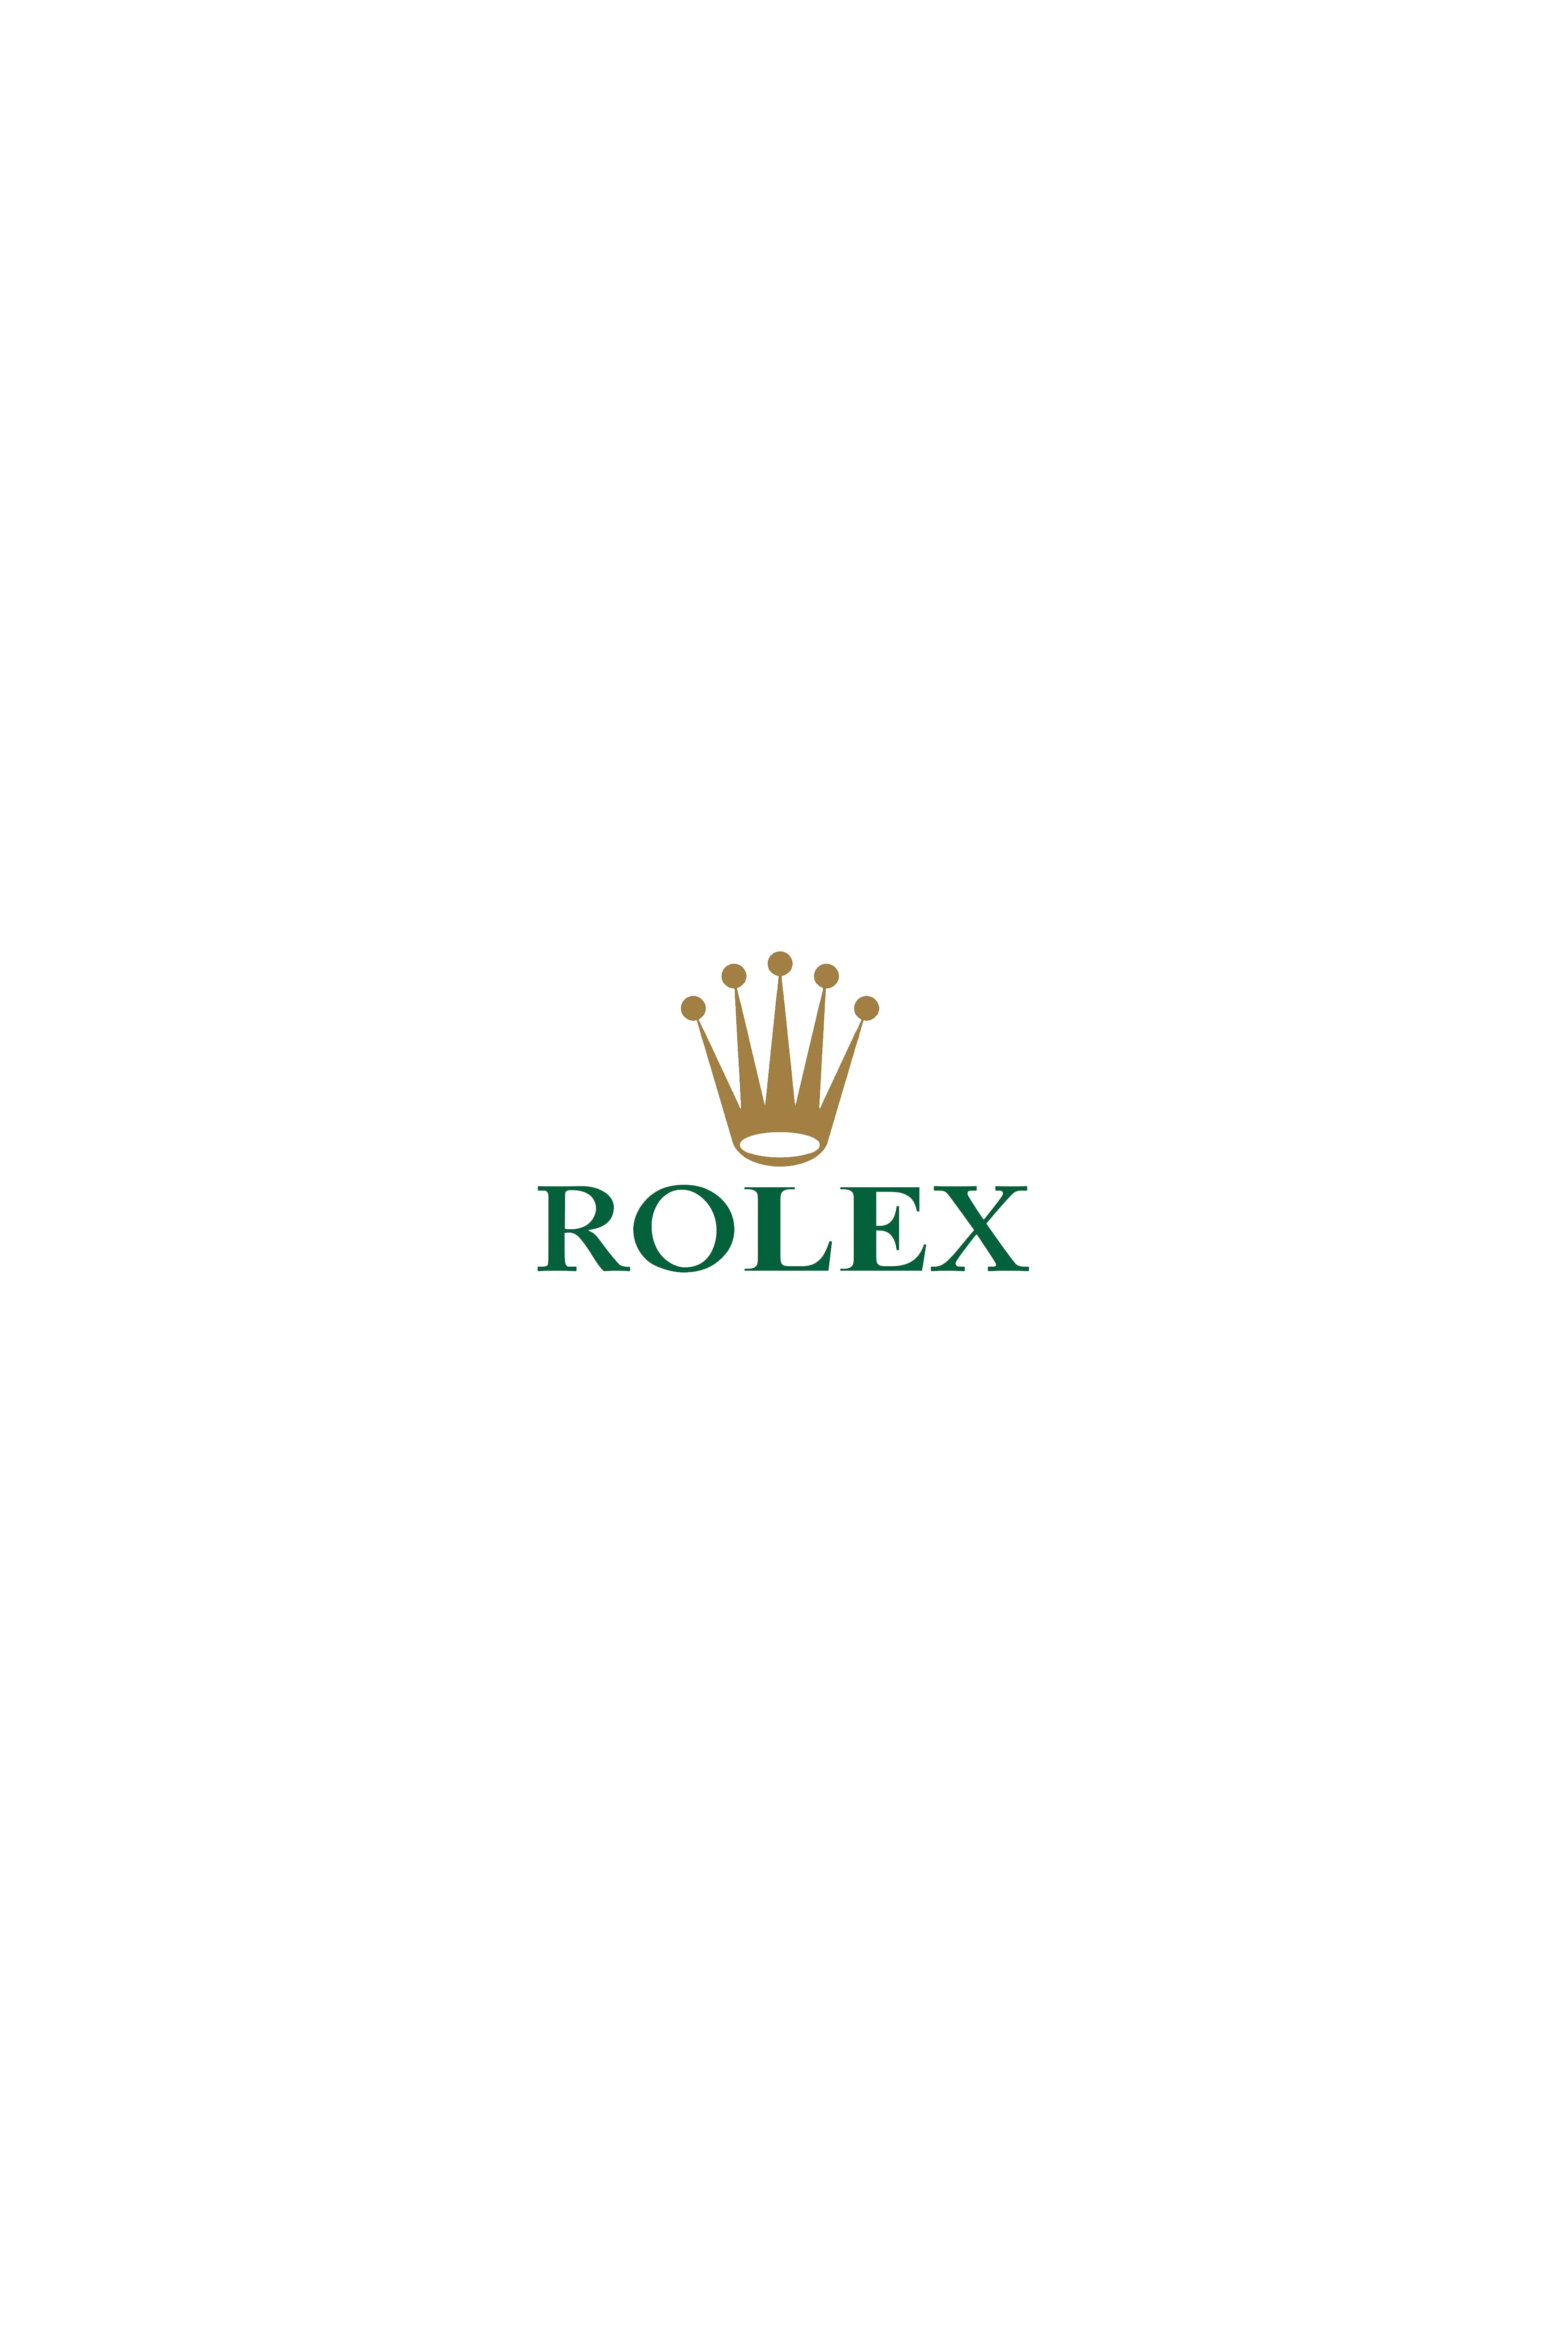 Rolex_Website_Logo